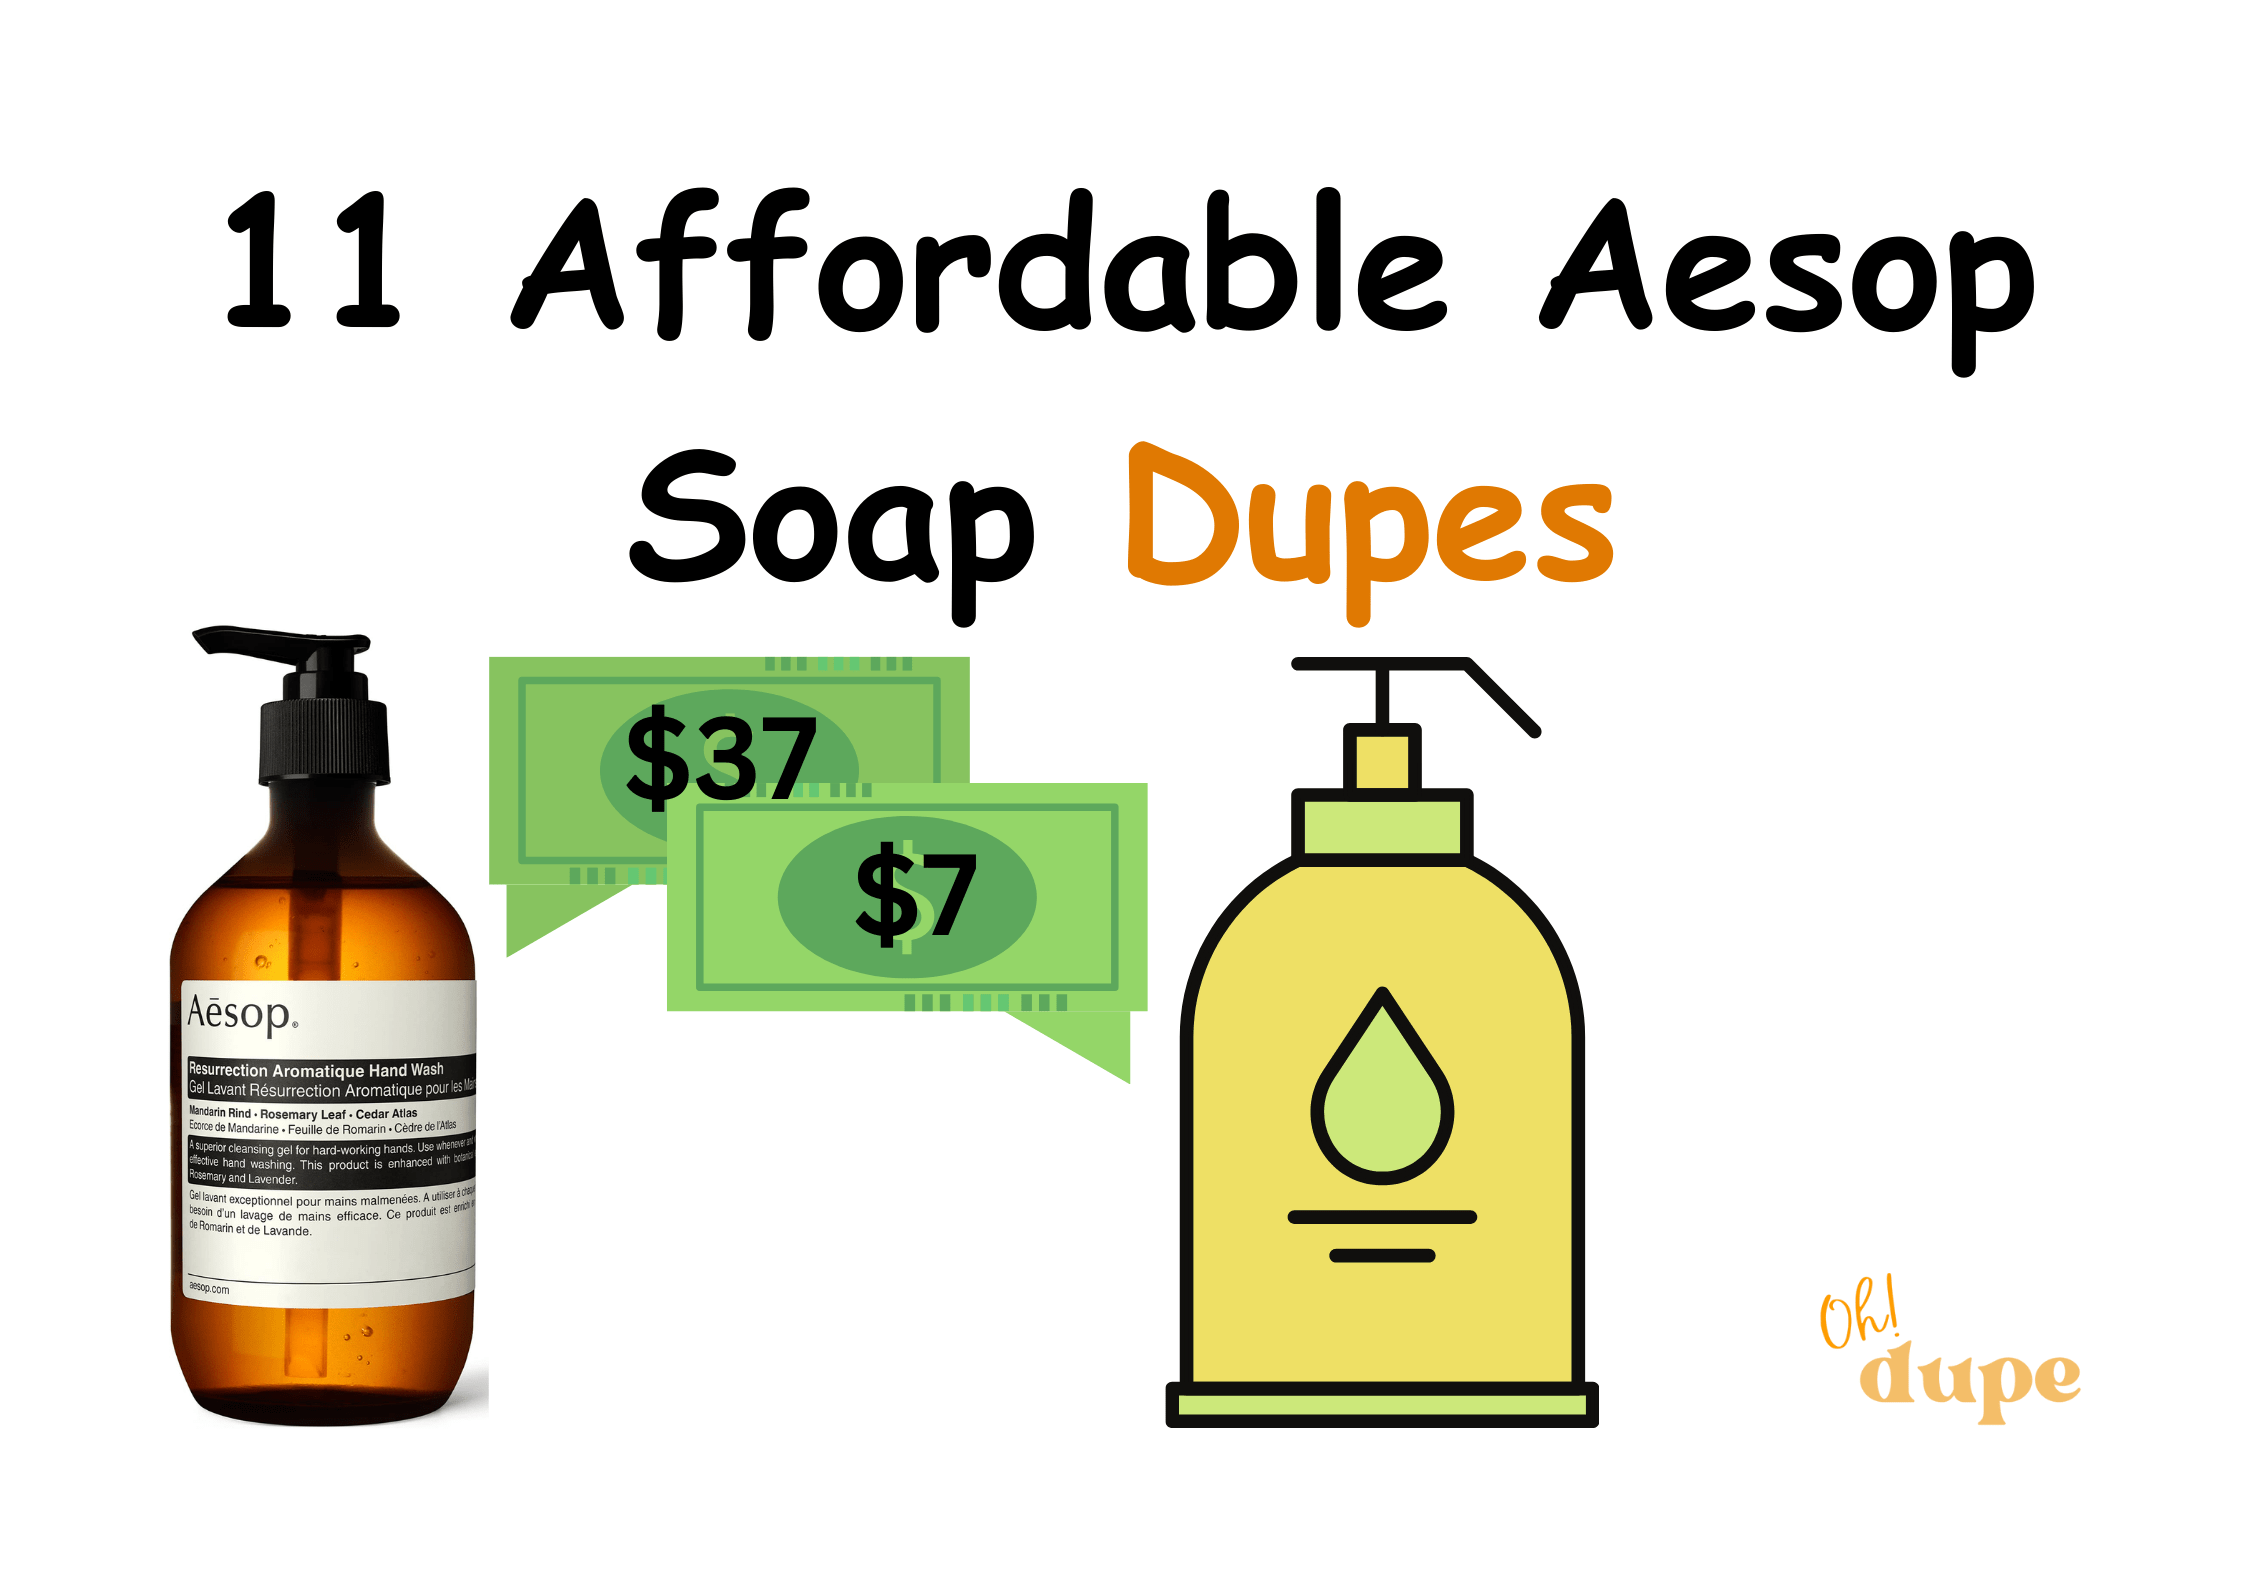 Aesop Soap Dupe